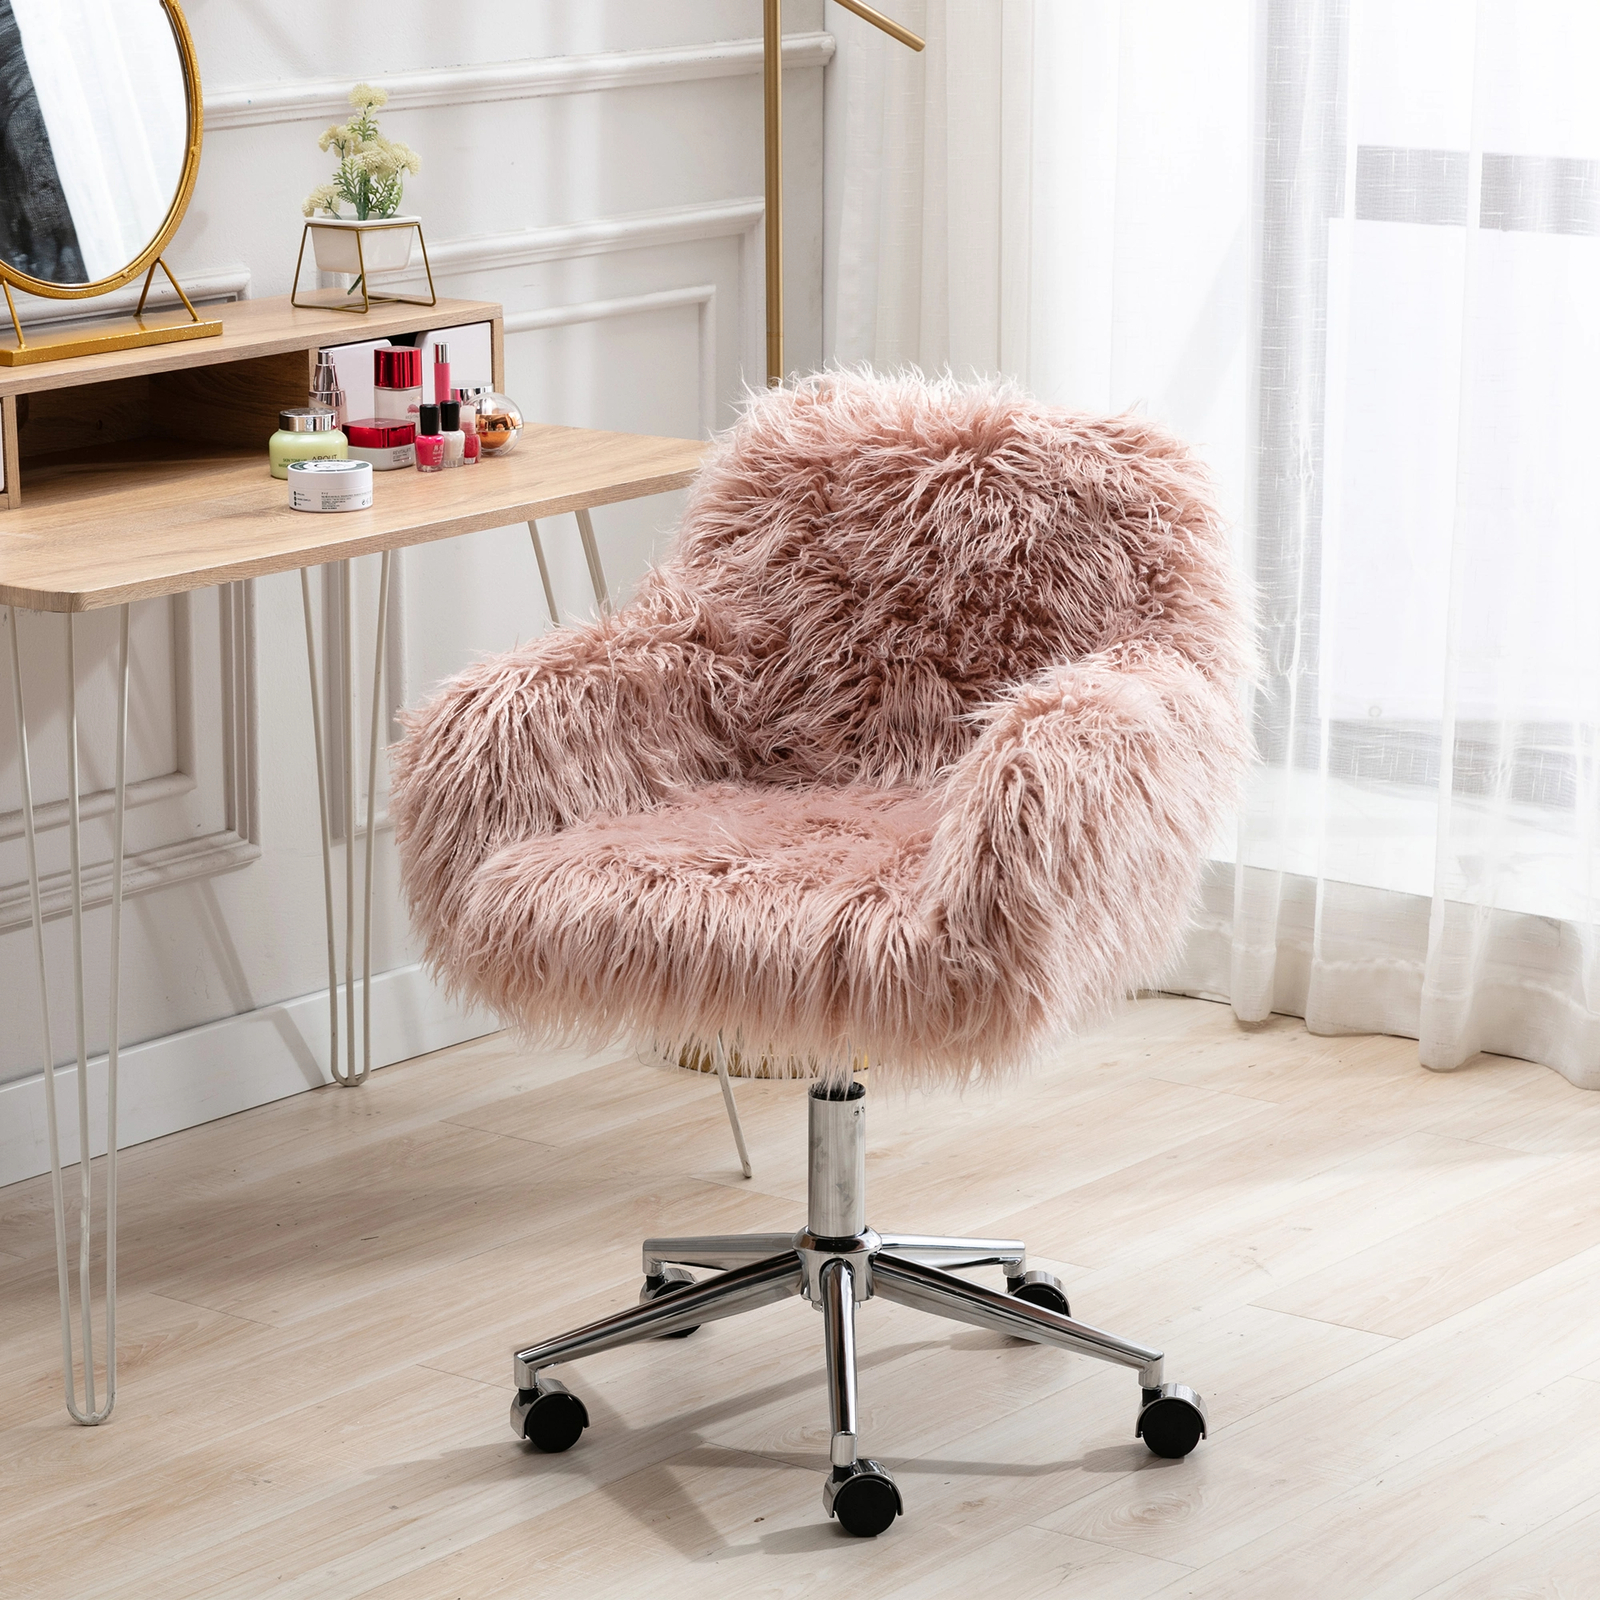 Comfortable Girls Office Chair Furry Office Chair Kids Computer Chair, Fur Chair - $169.99